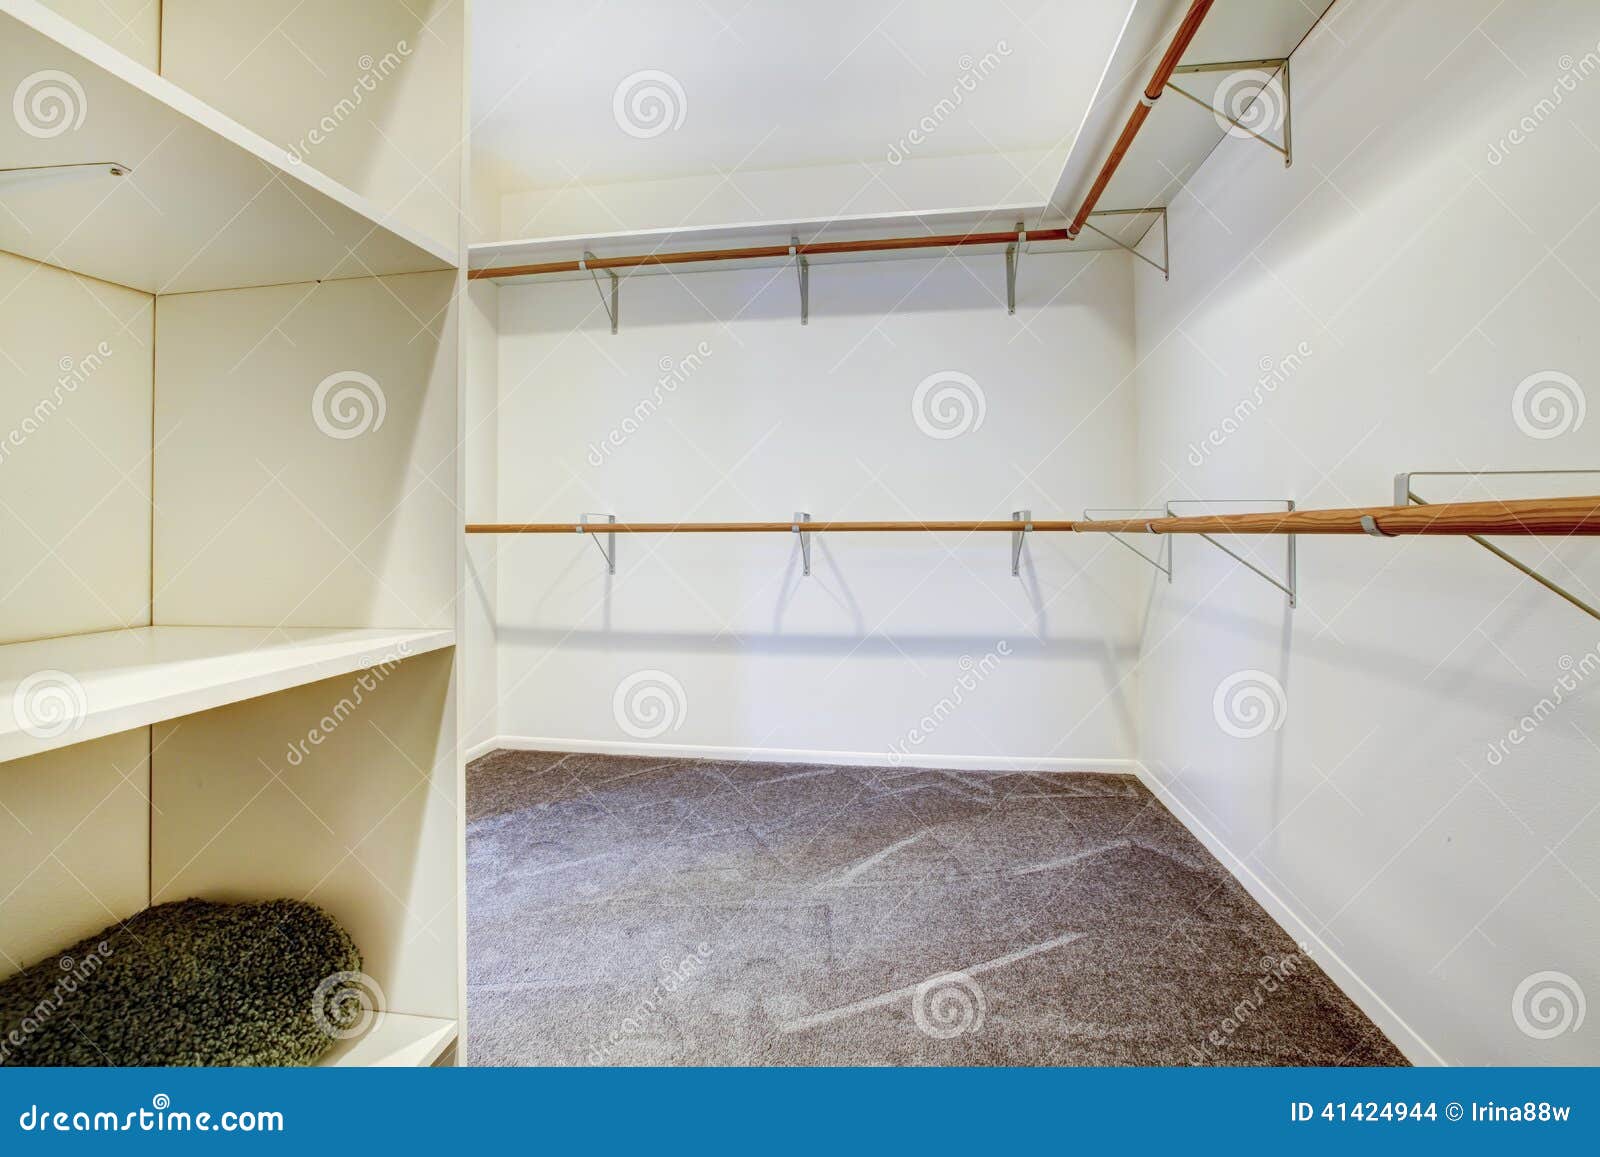 Walk-in Empty Closet Stock Photo - Image: 41424944